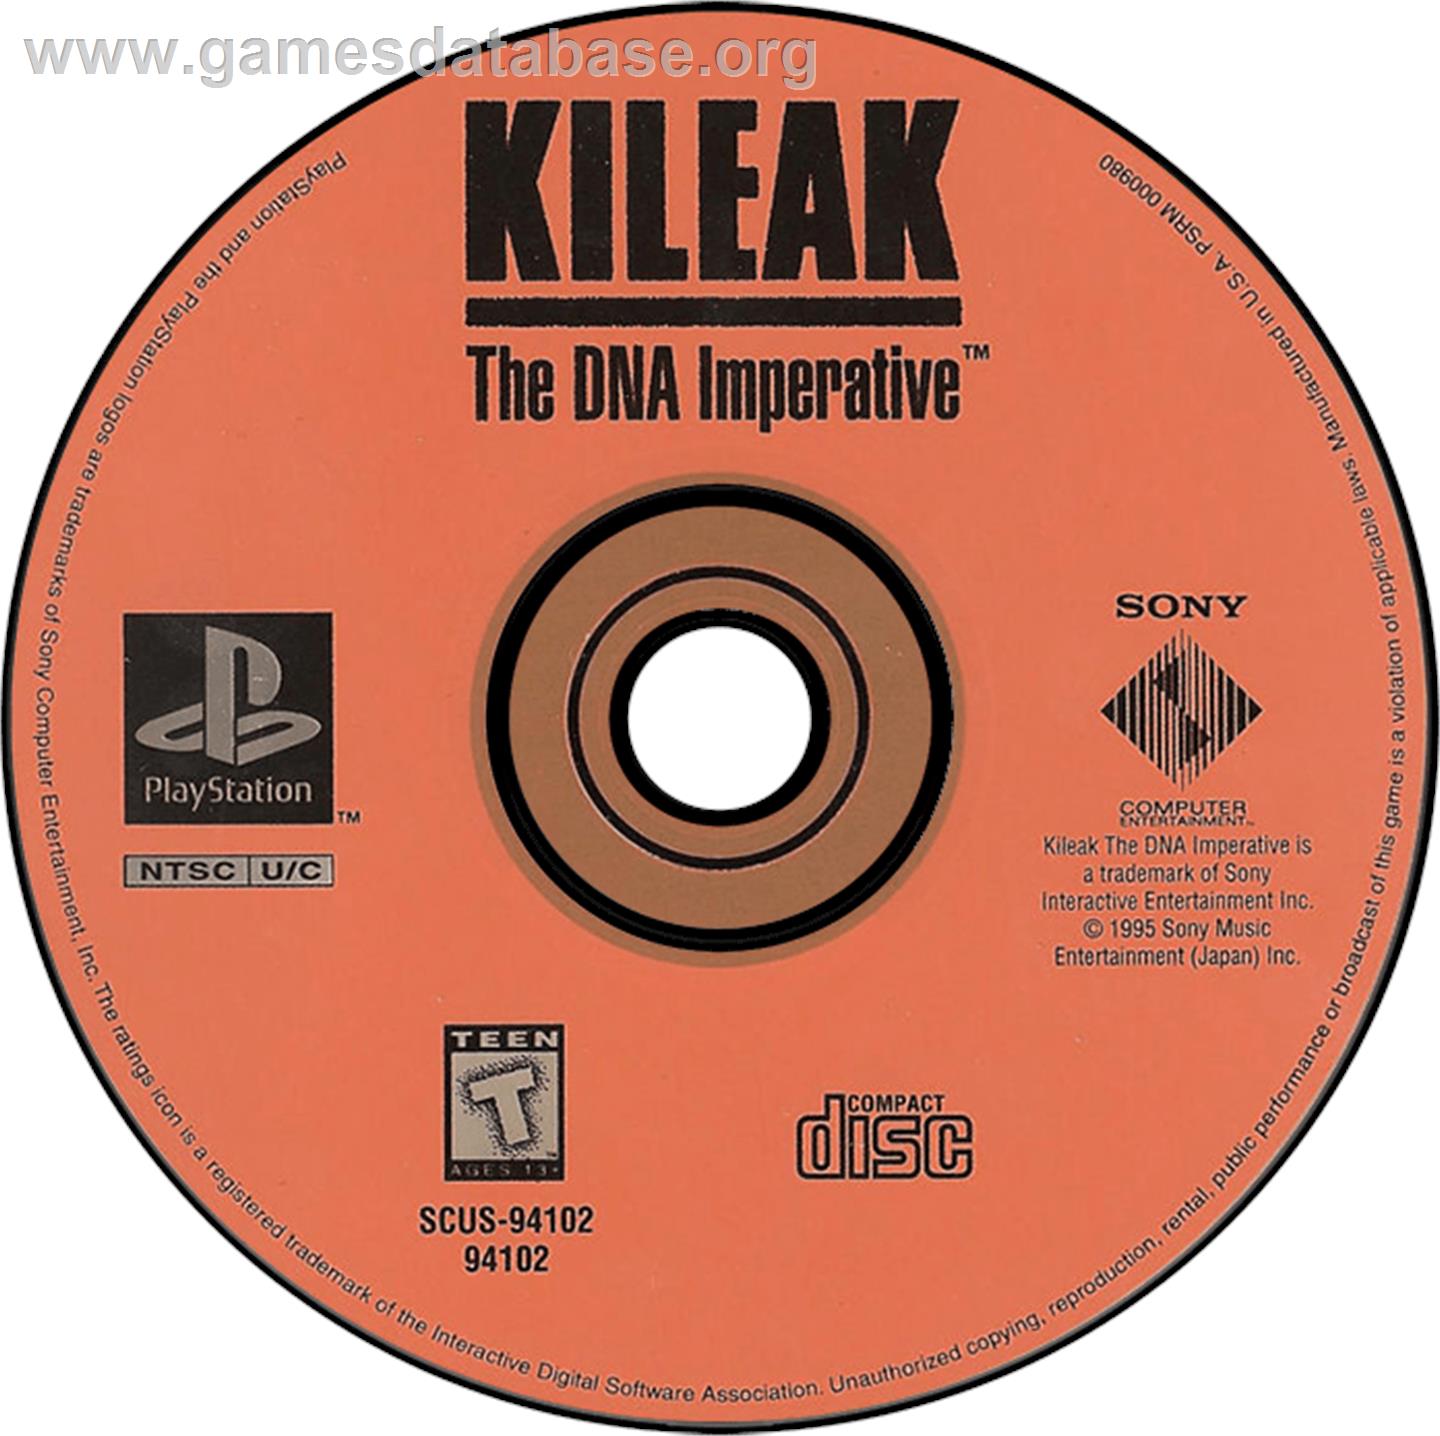 Kileak: The DNA Imperative - Sony Playstation - Artwork - Disc